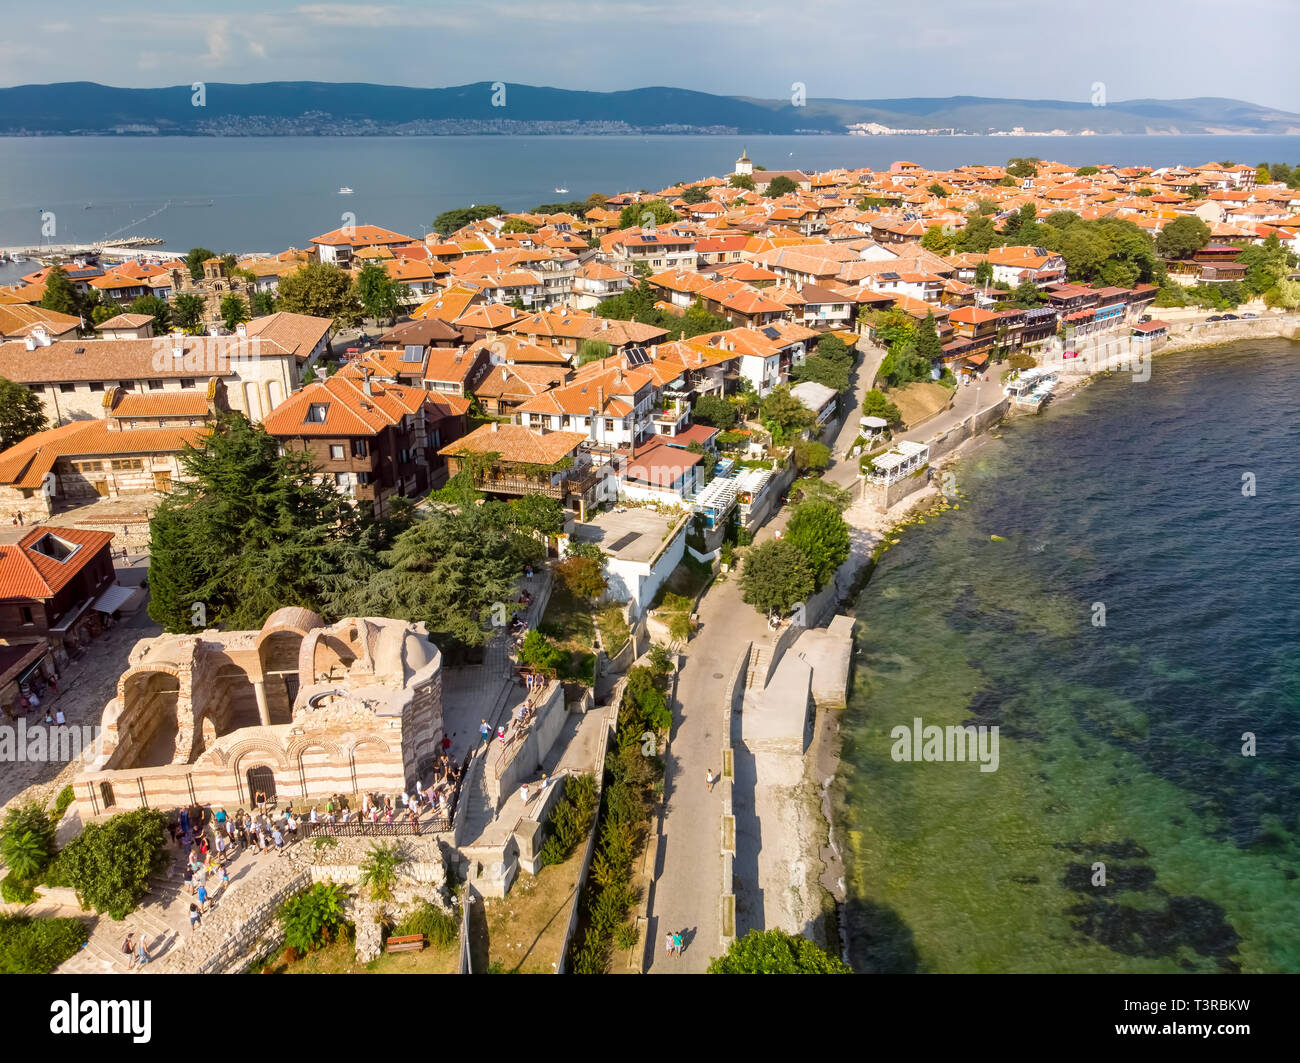 Nessebar, ancient city on the Black Sea coast of Bulgaria. Aerial view Stock Photo